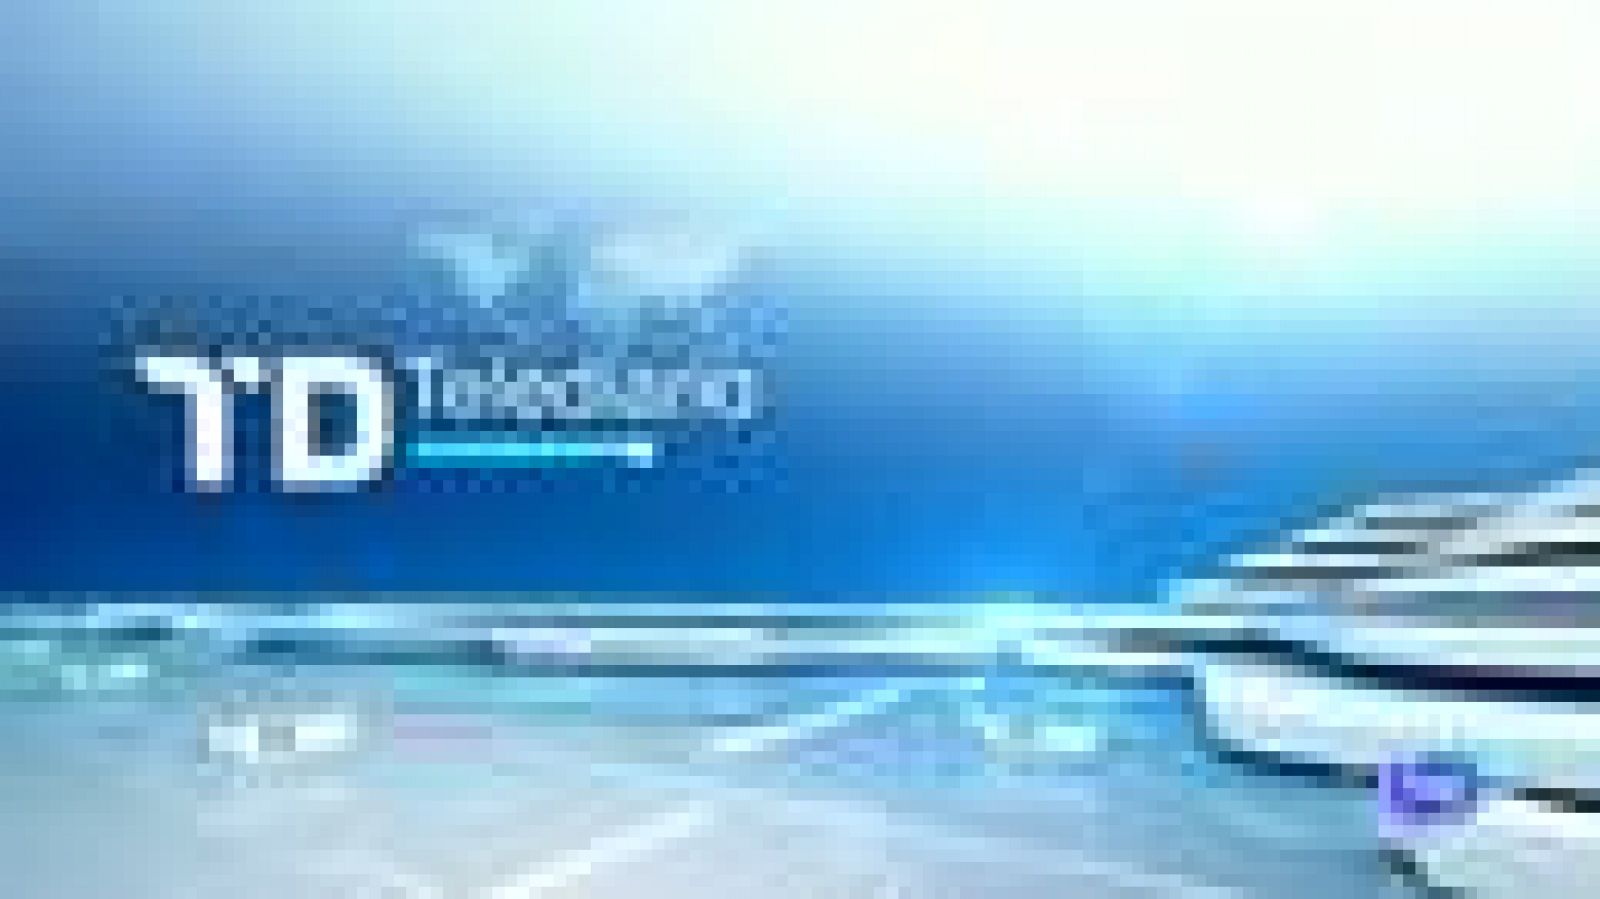 Telediario 1: Telediario Matinal en 4' - 24/02/12 | RTVE Play